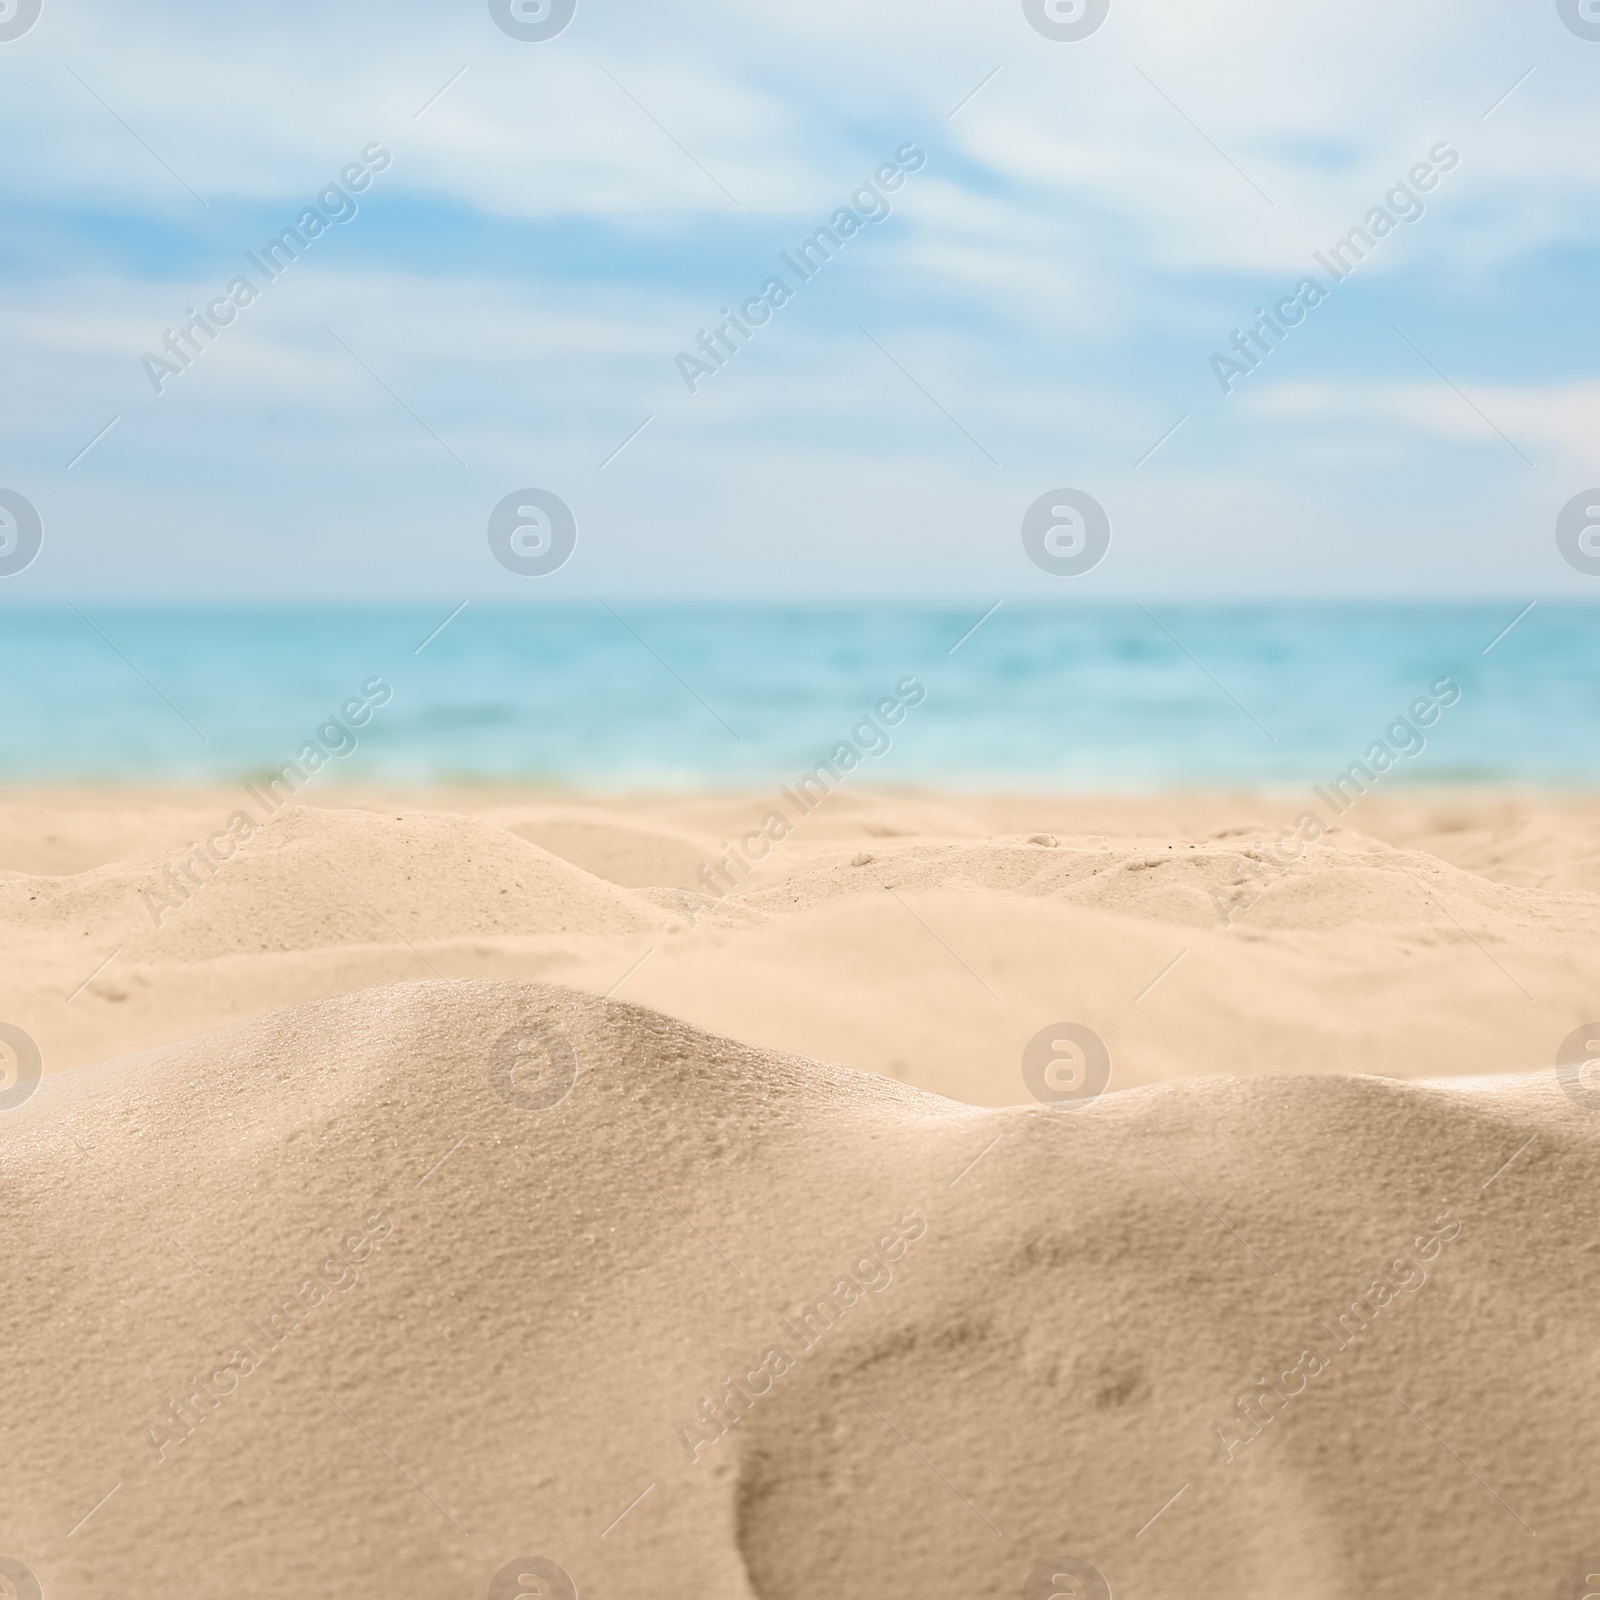 Image of Beautiful beach with golden sand near ocean, closeup view